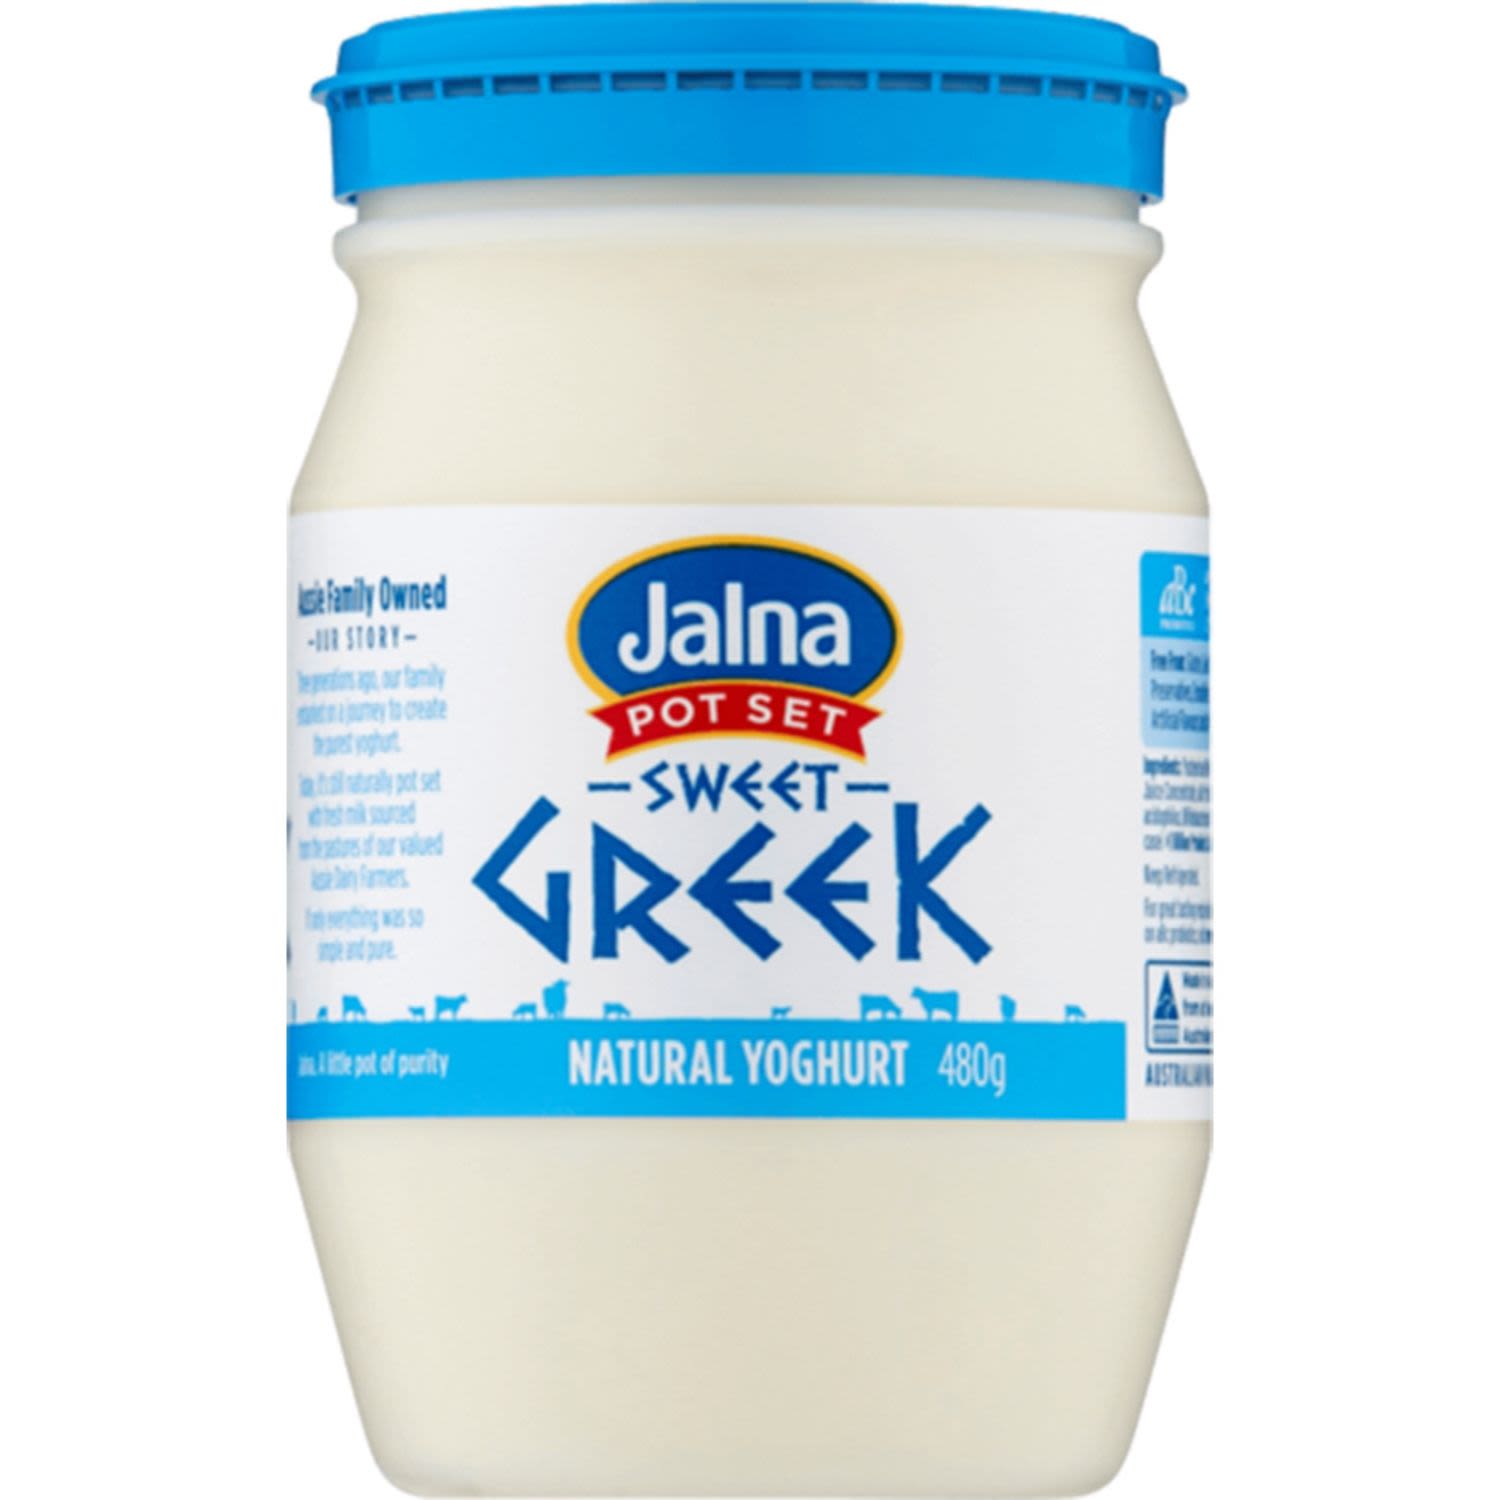 Jalna Greek Yoghurt Sweet & Creamy, 480 Gram